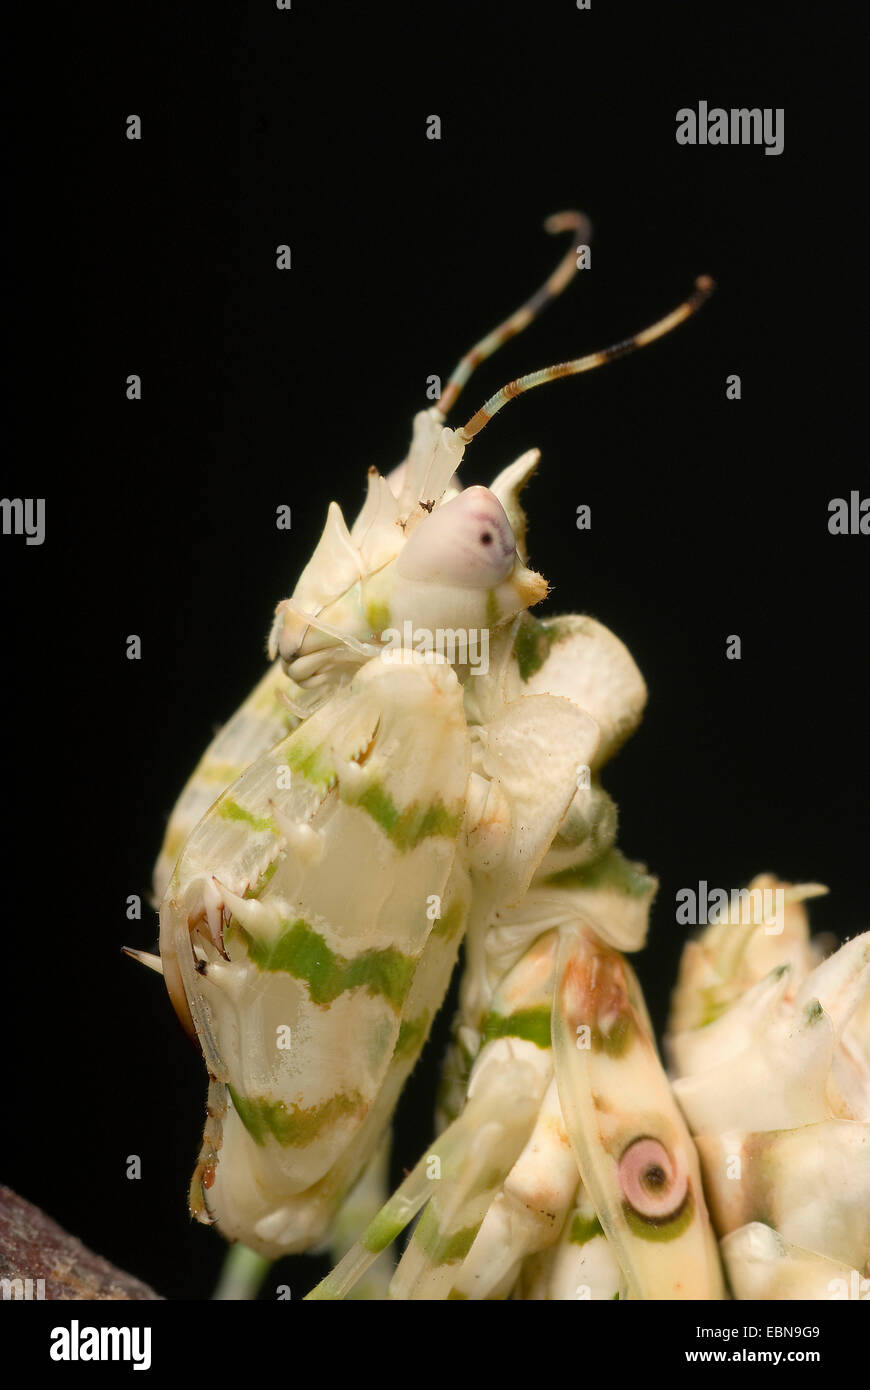 Wahlbergi del fiore spinoso Mantis, Wahlbergis fiore spinoso Mantis (Pseudocreobotra wahlbergi), ritratto Foto Stock